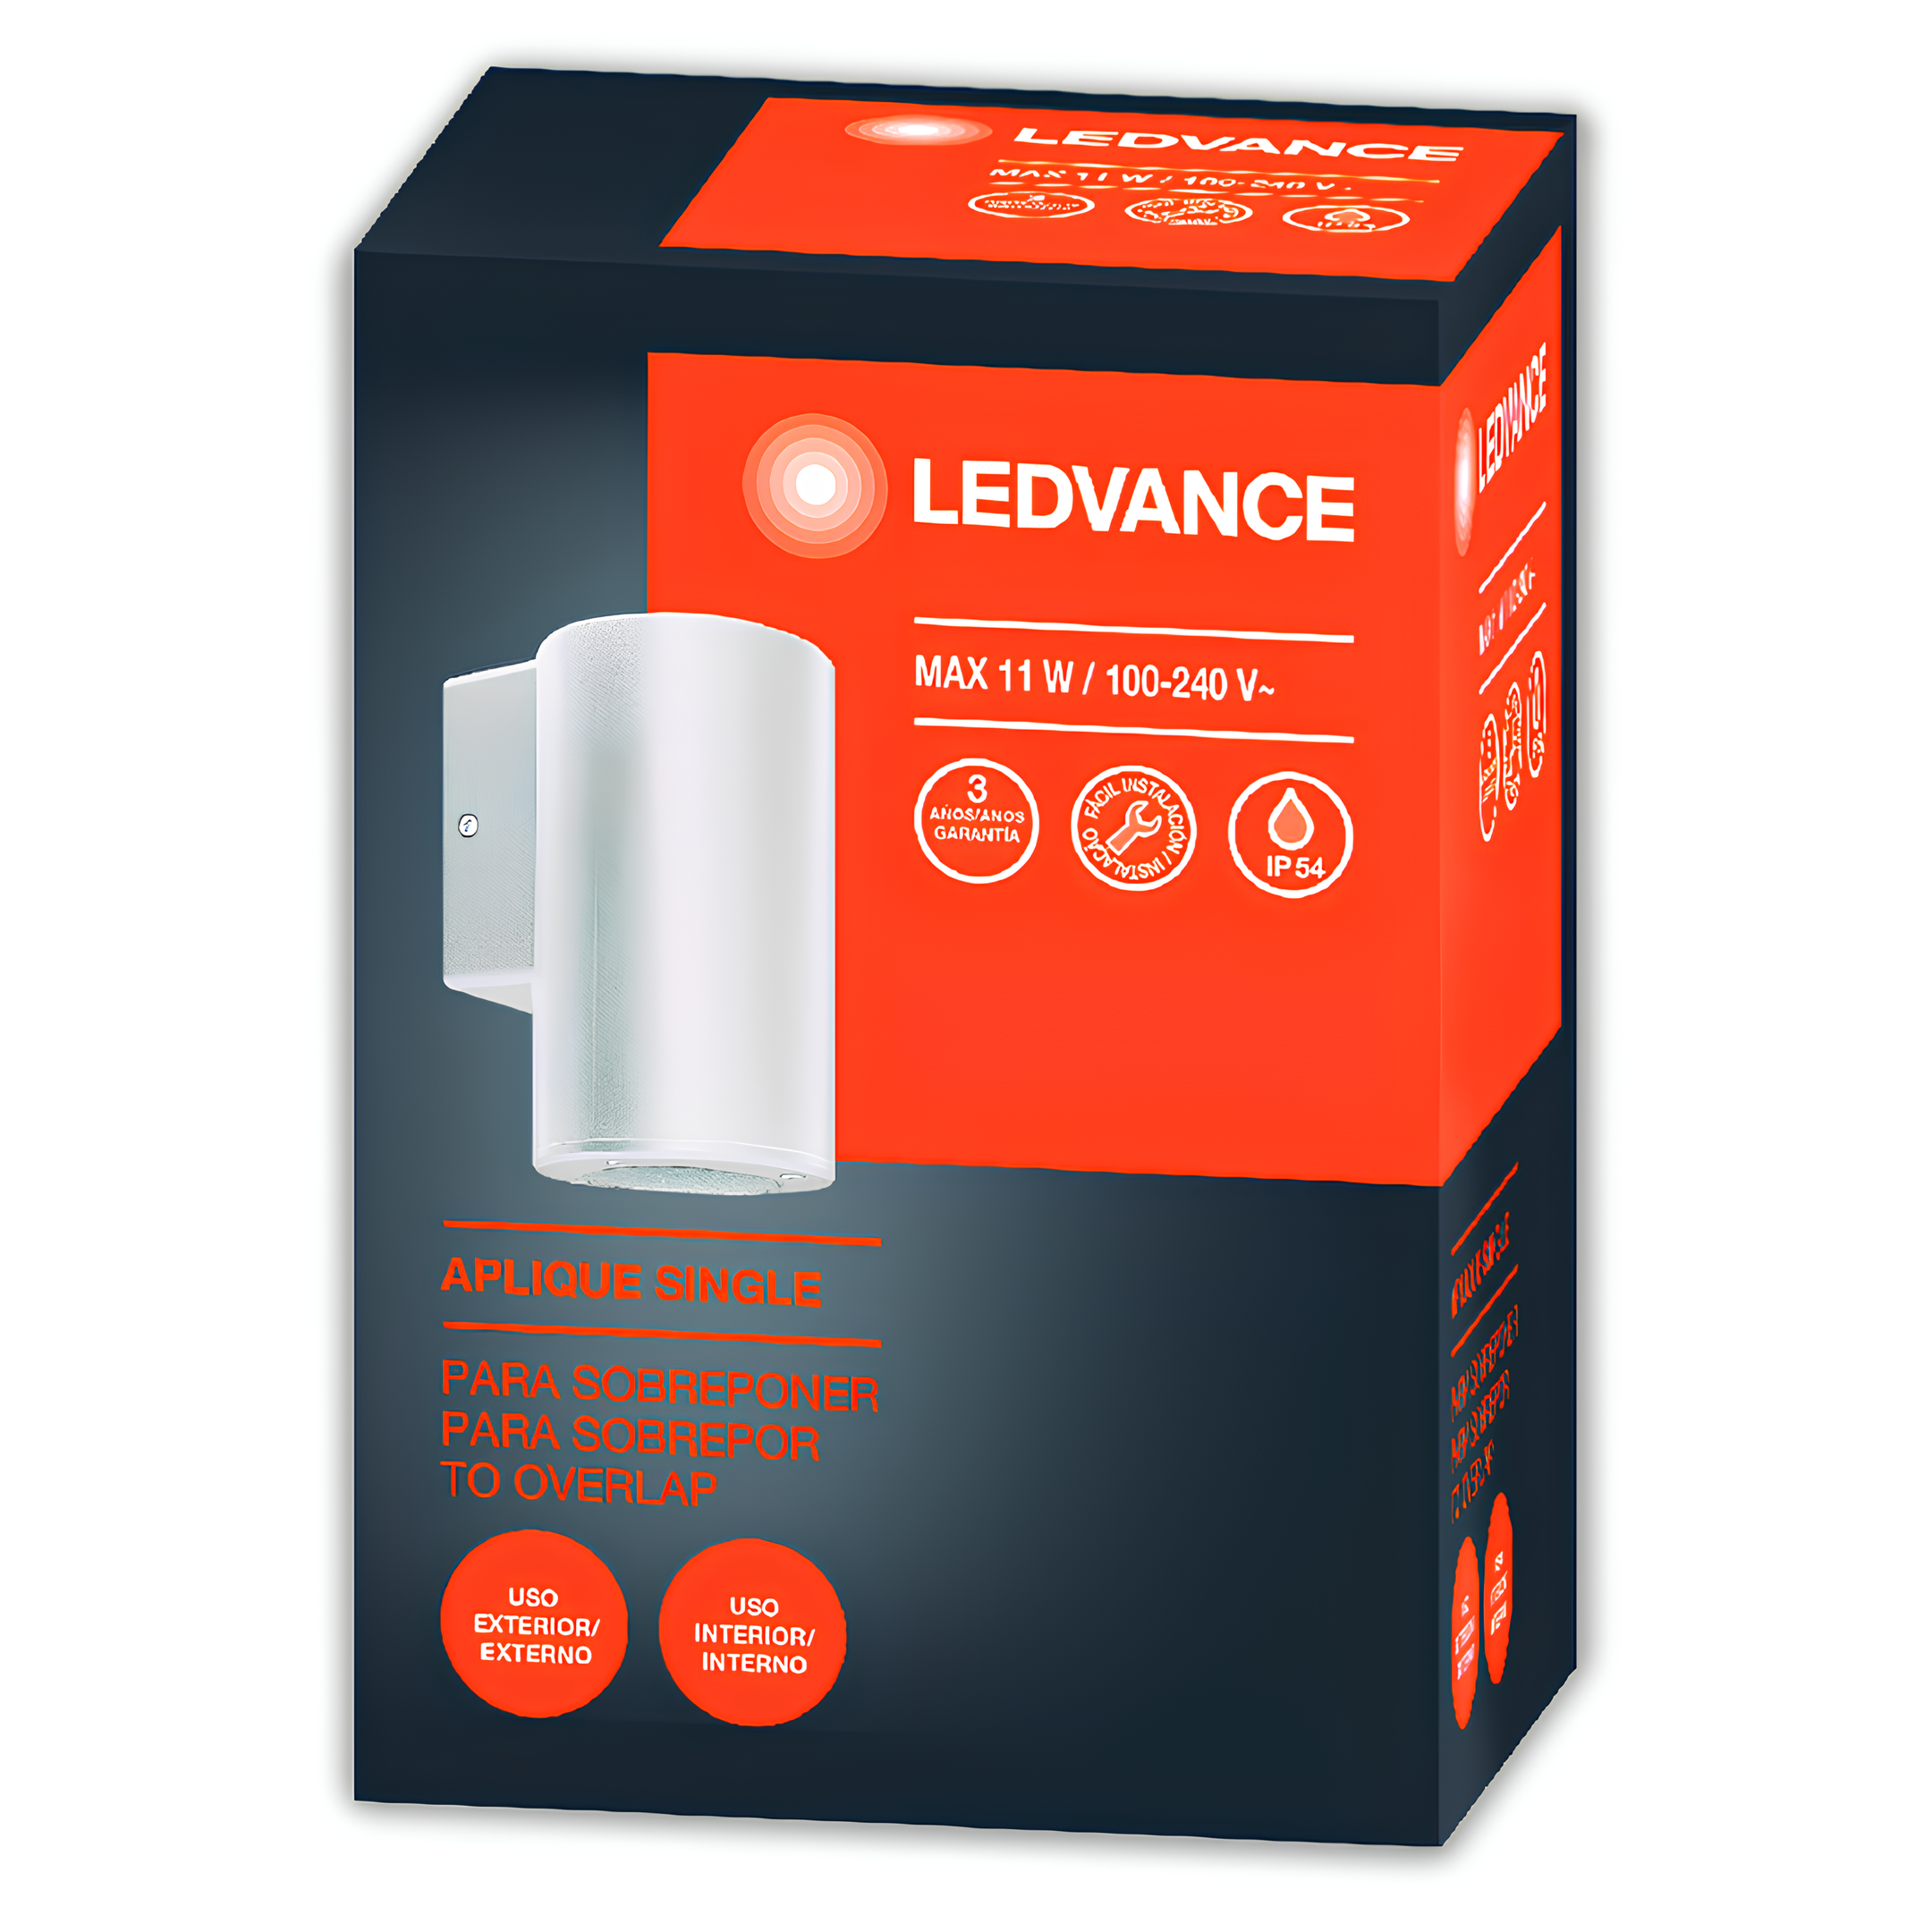 Luminaria Led Arandela Aplique Single Cylinder 1X11w Ip54 Bivolt Gu10 Ledvance